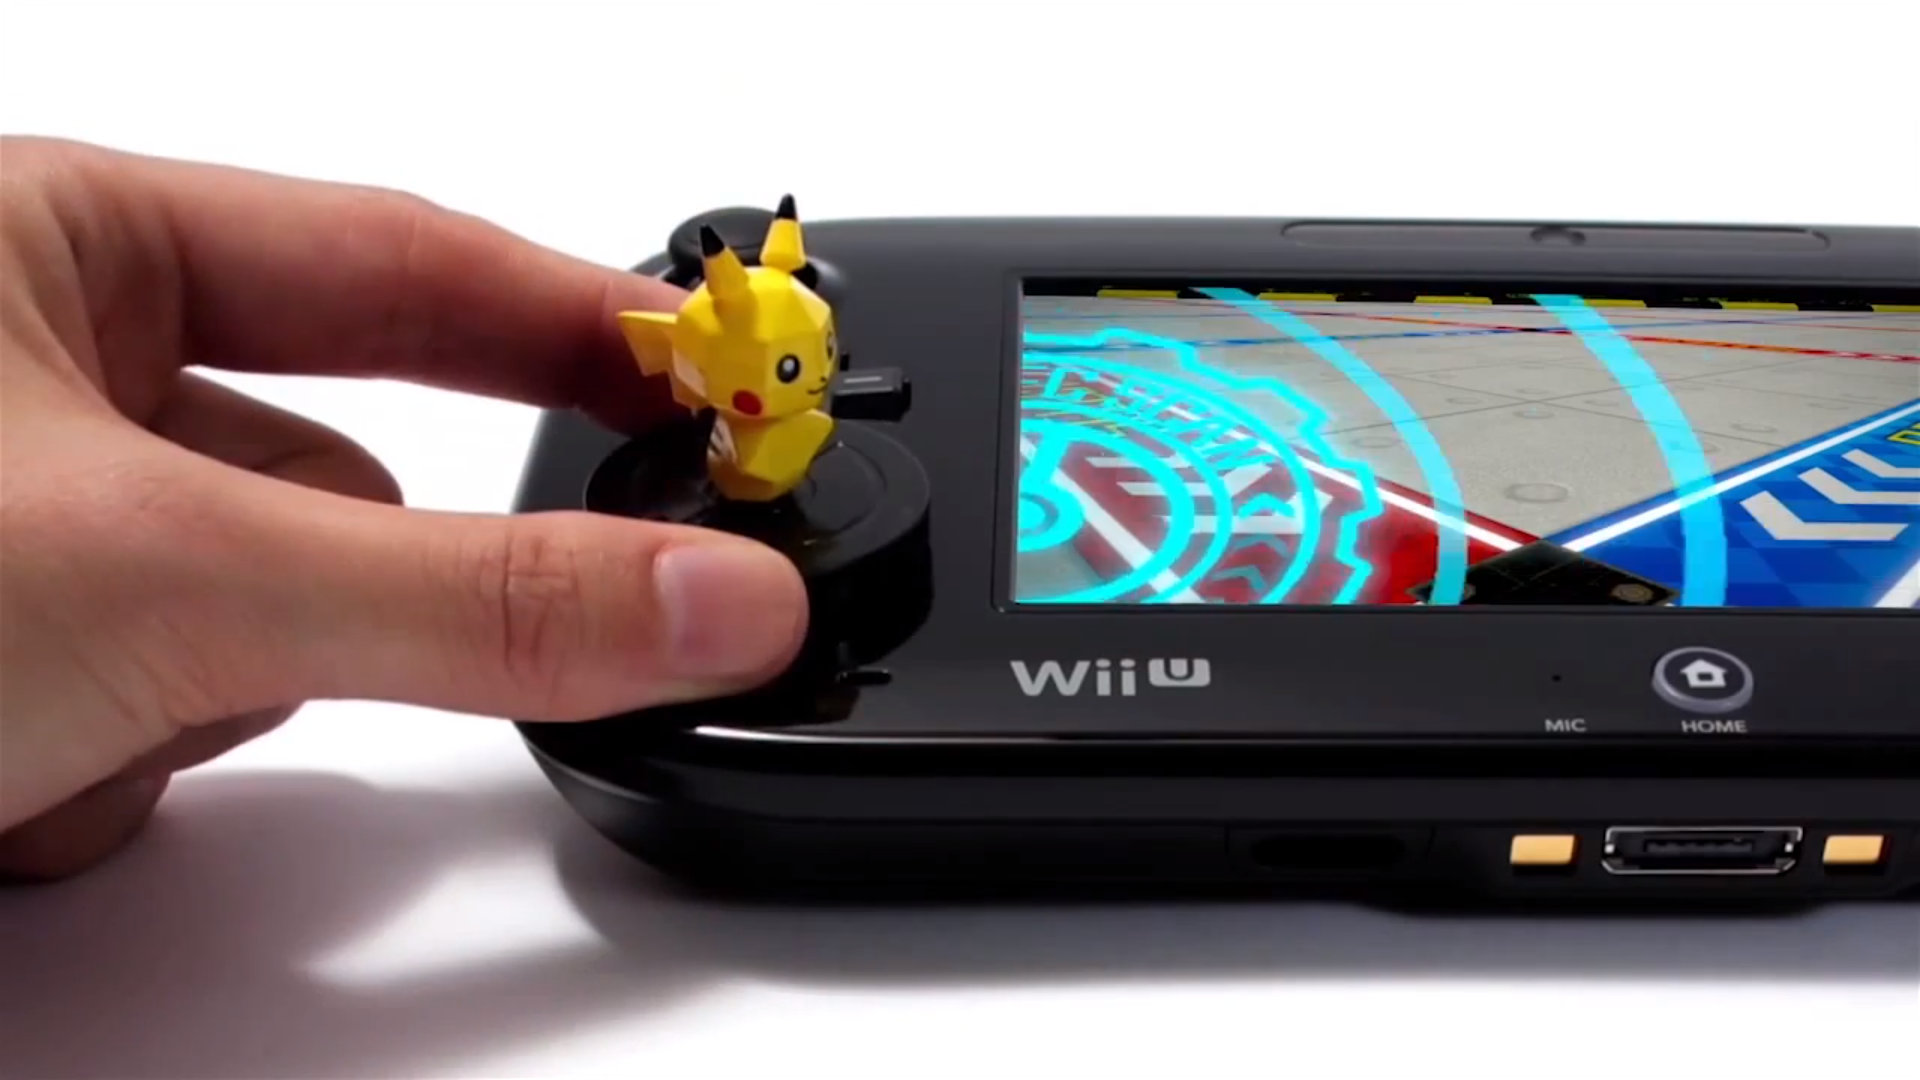 Pokemon Rumble U Wii U GamePad NFC